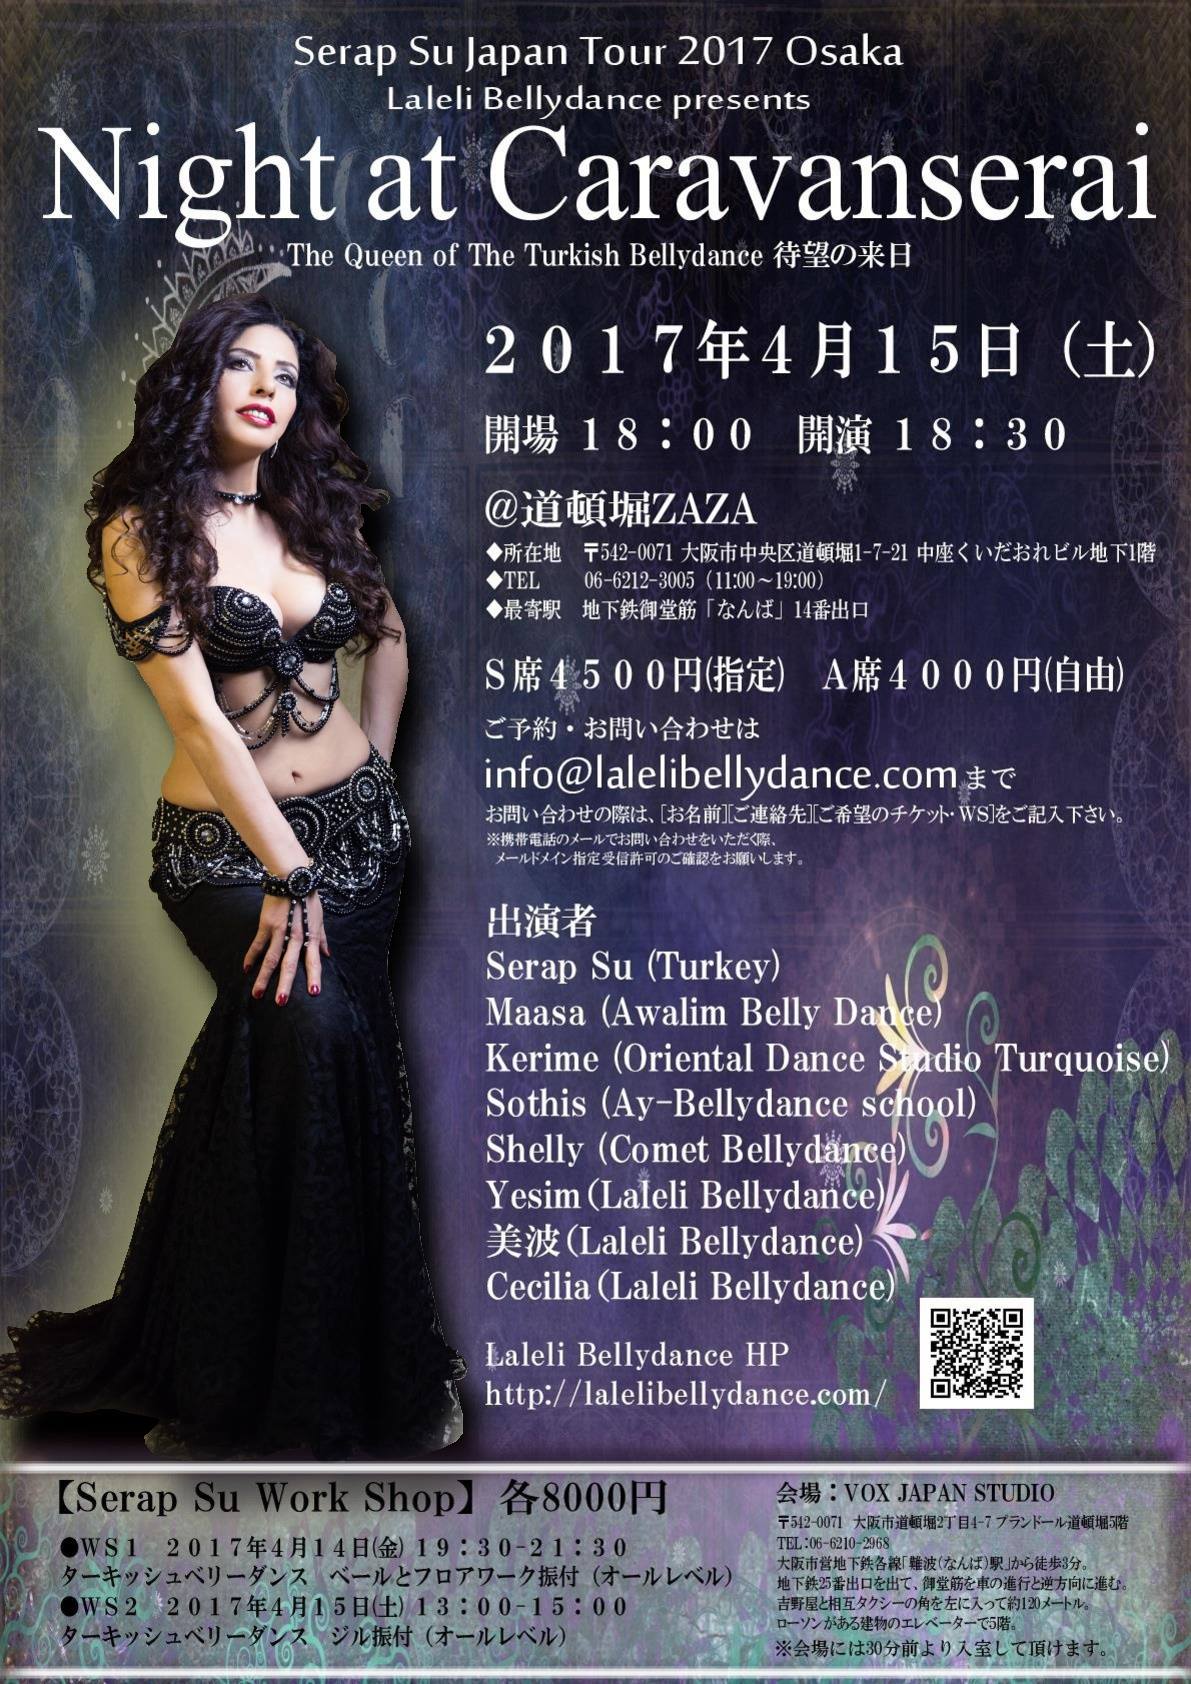 4/14,15 Laleli Bellydance presents Serap Su Japan Tour 2017 大阪　” Night at Caravanserai “